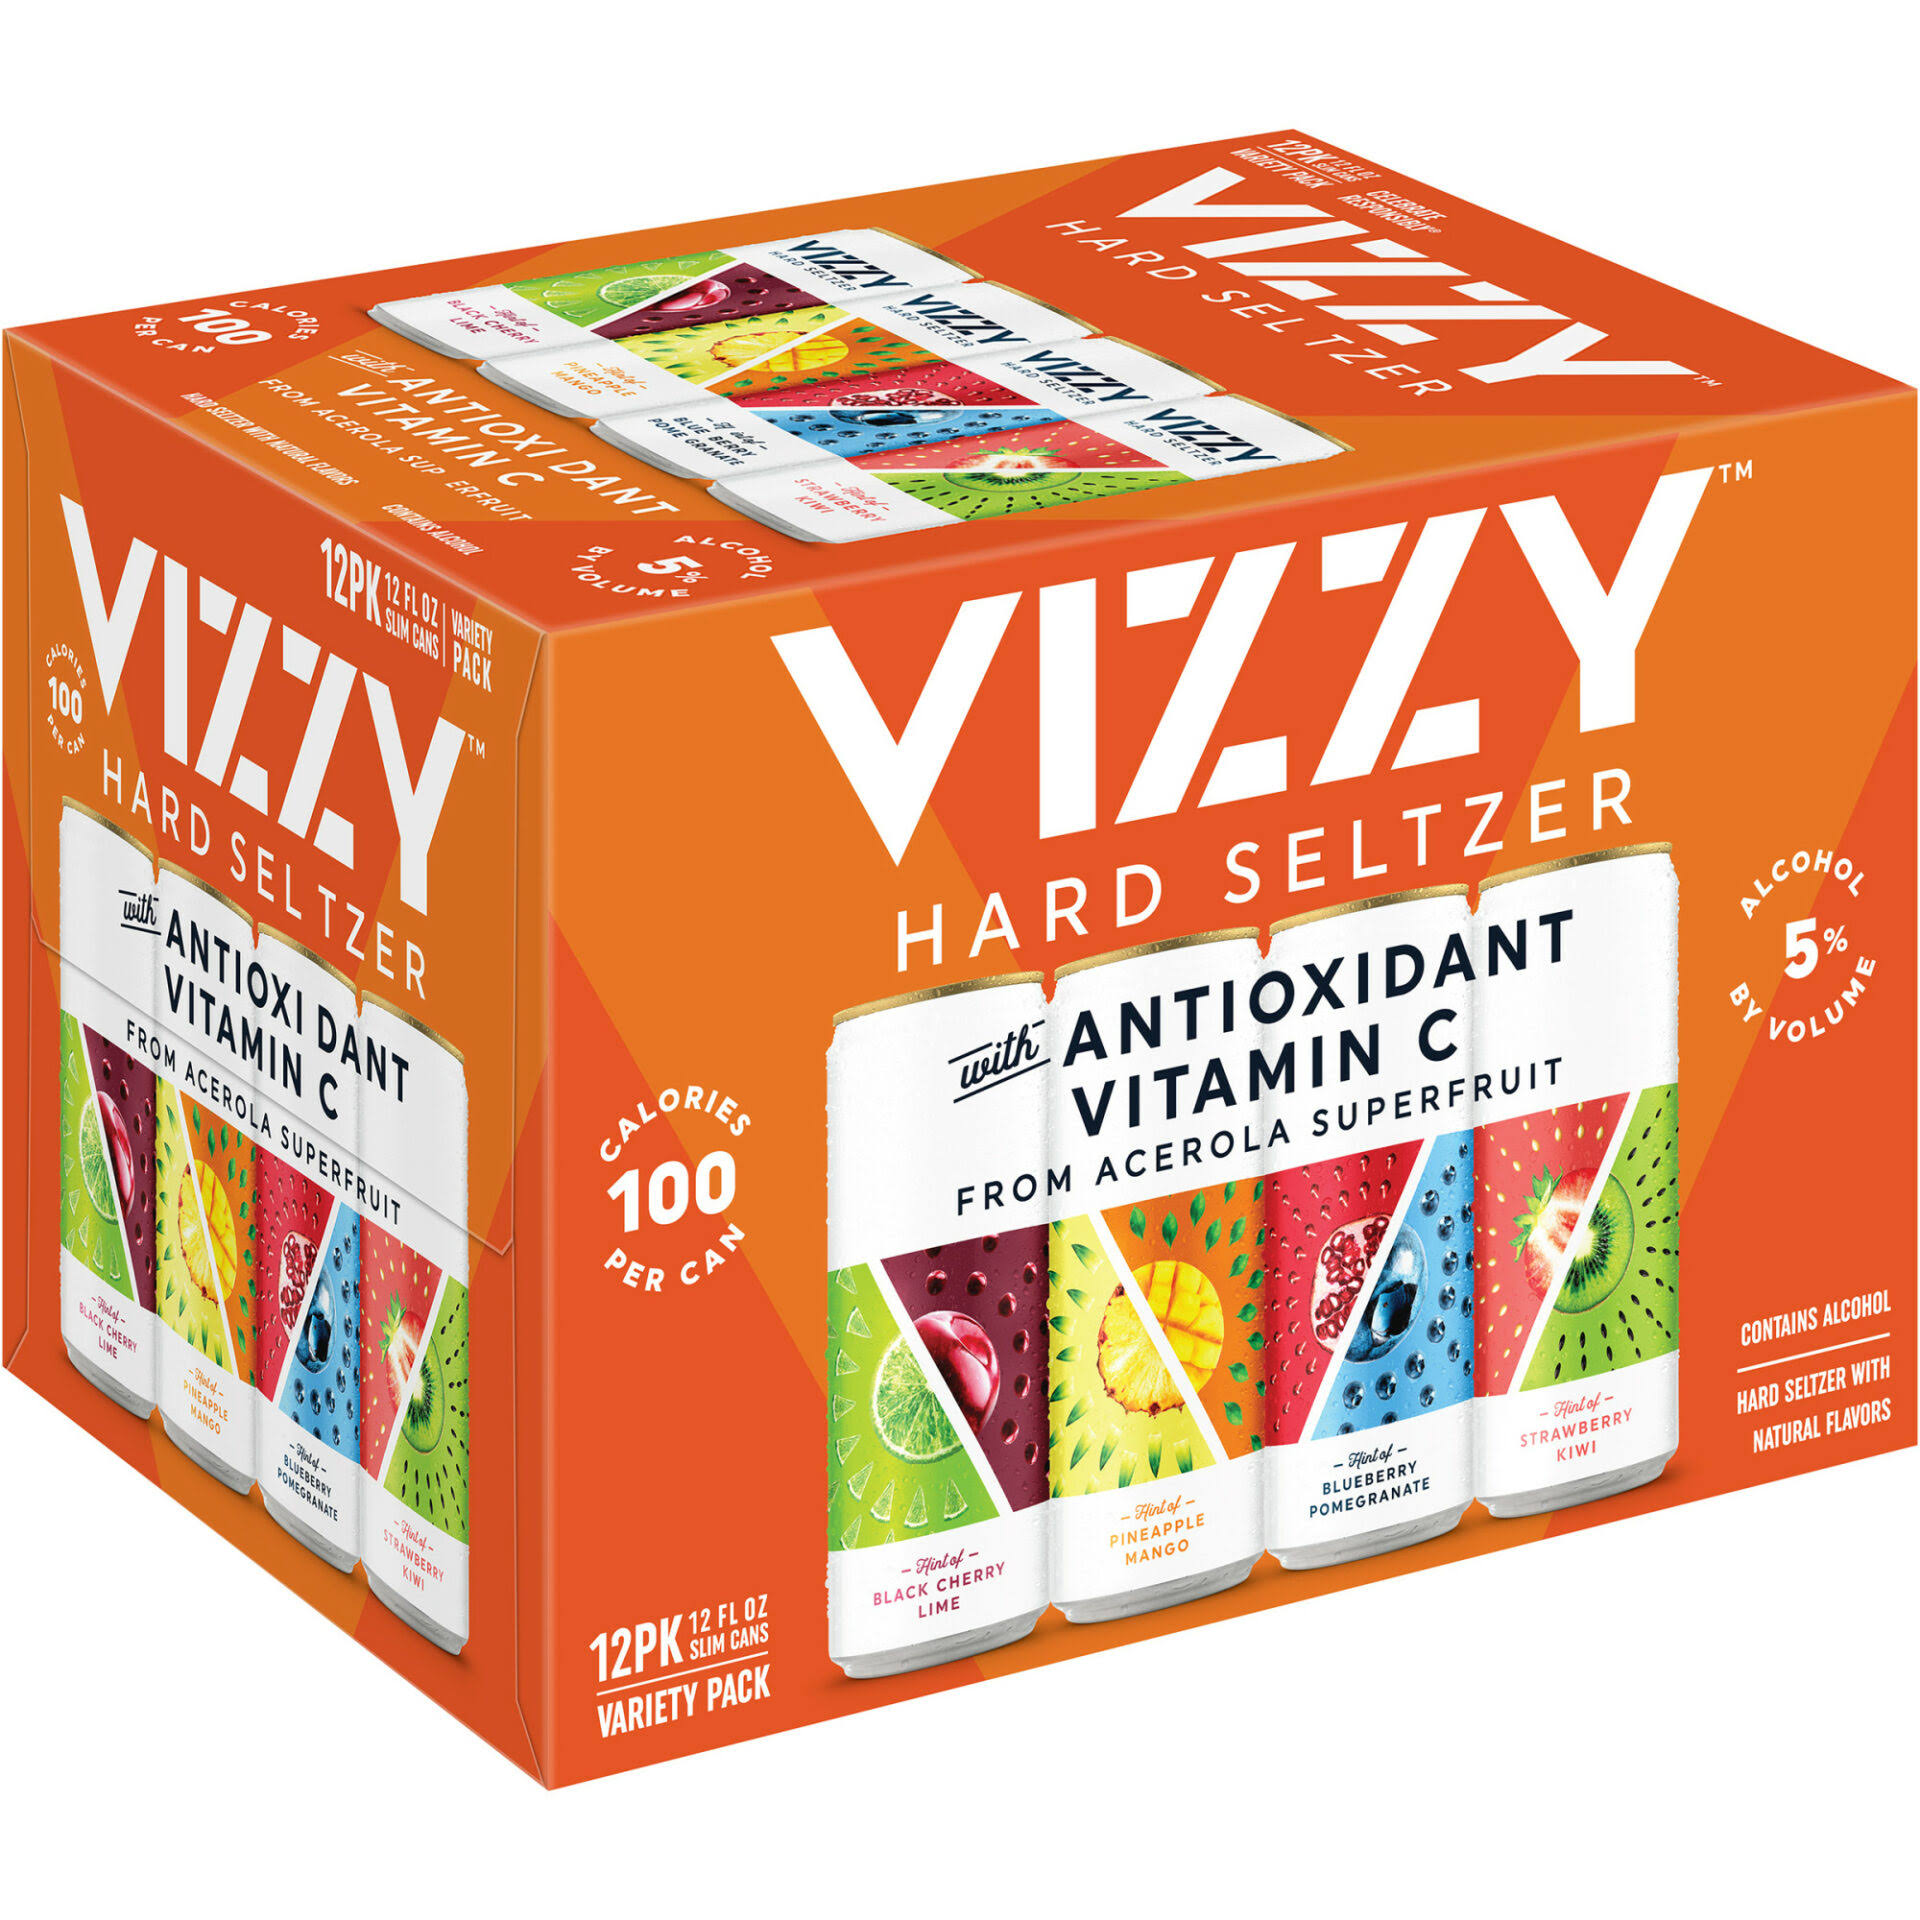 Vizzy Hard Seltzer, Variety Pack, 12 Pack - 12 pack, 12 fl oz slim cans